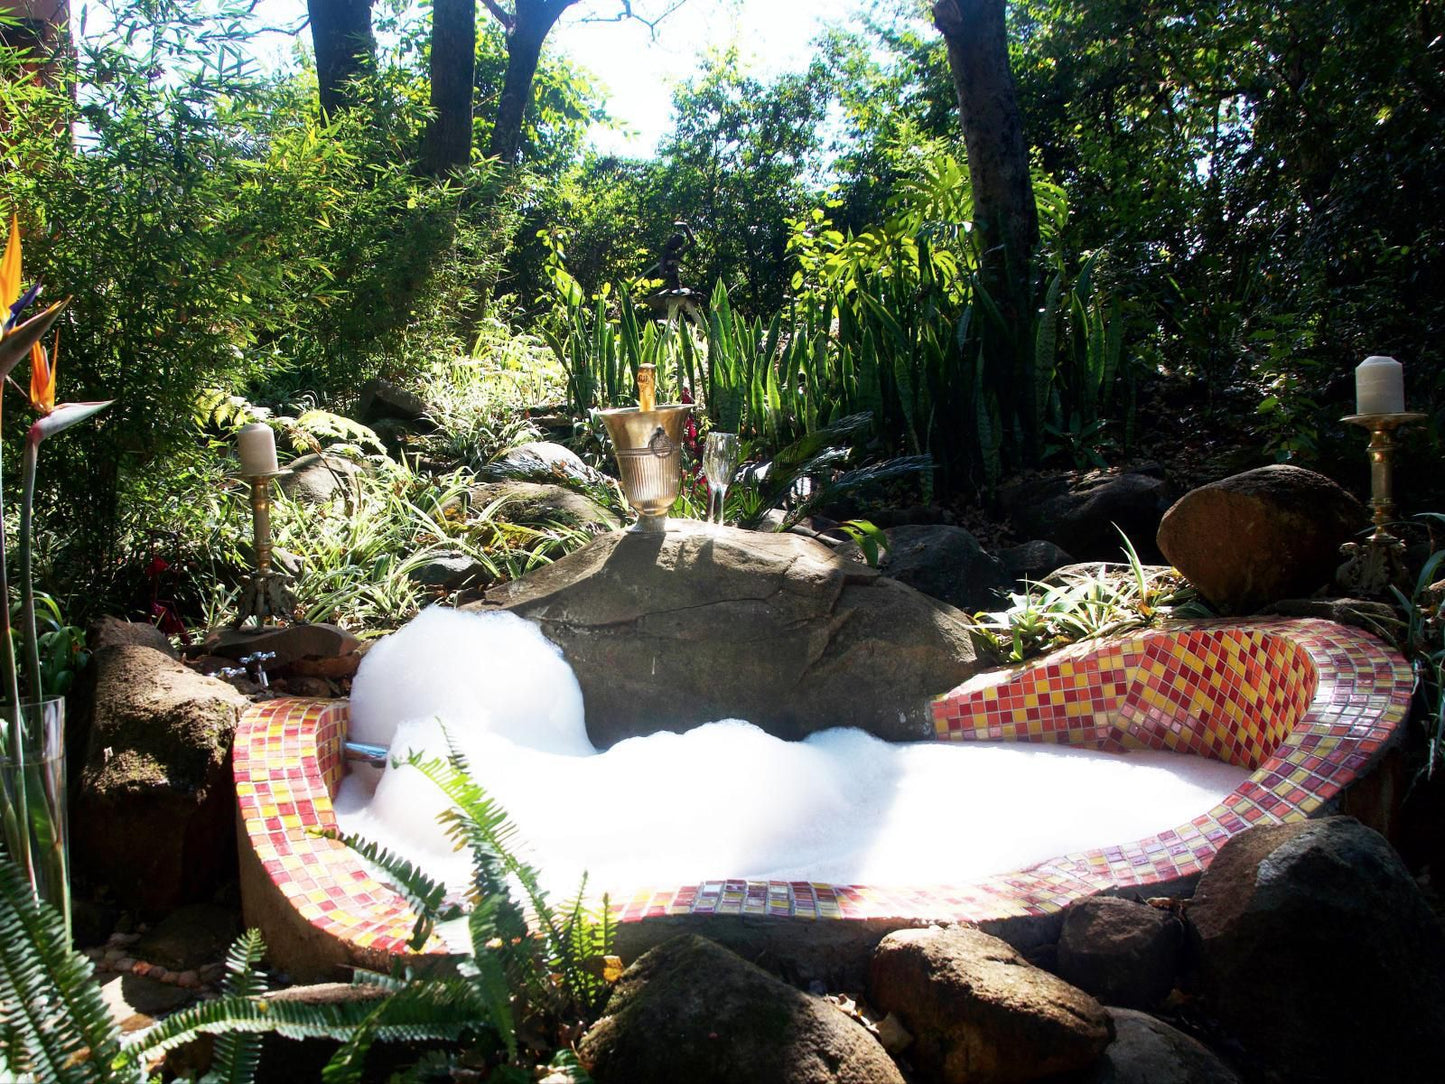 Timamoon Lodge Hazyview Mpumalanga South Africa Garden, Nature, Plant